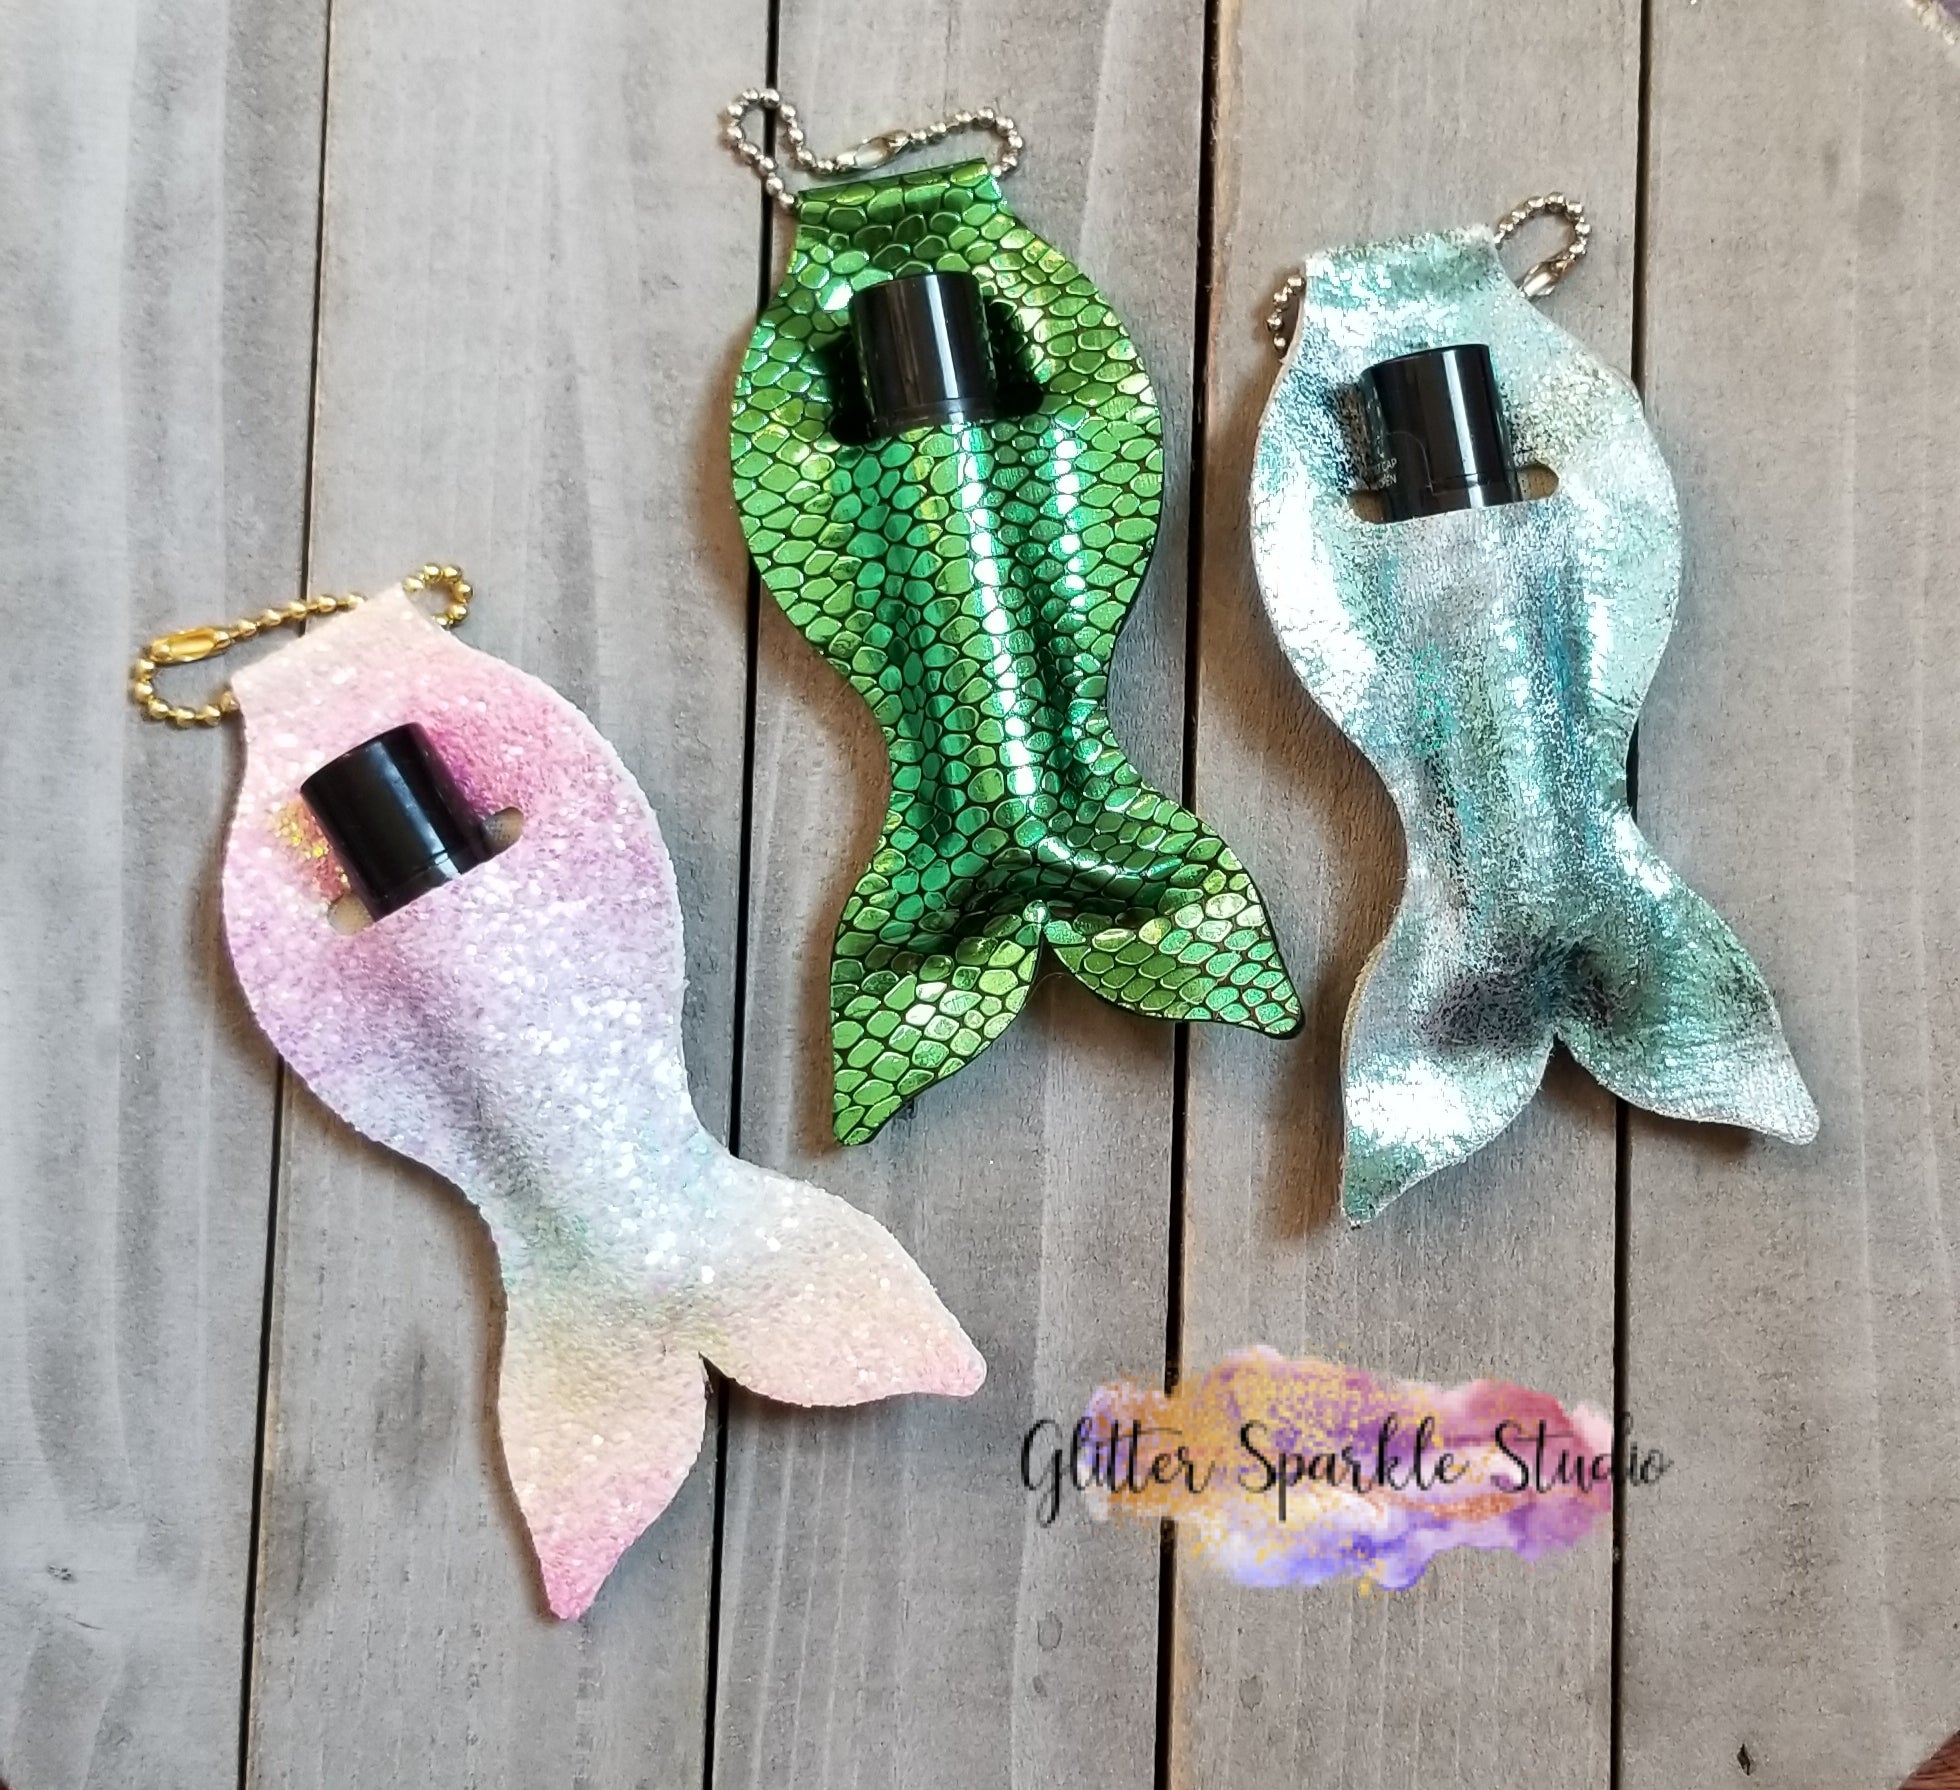 Pink mermaid tail glitter keychain